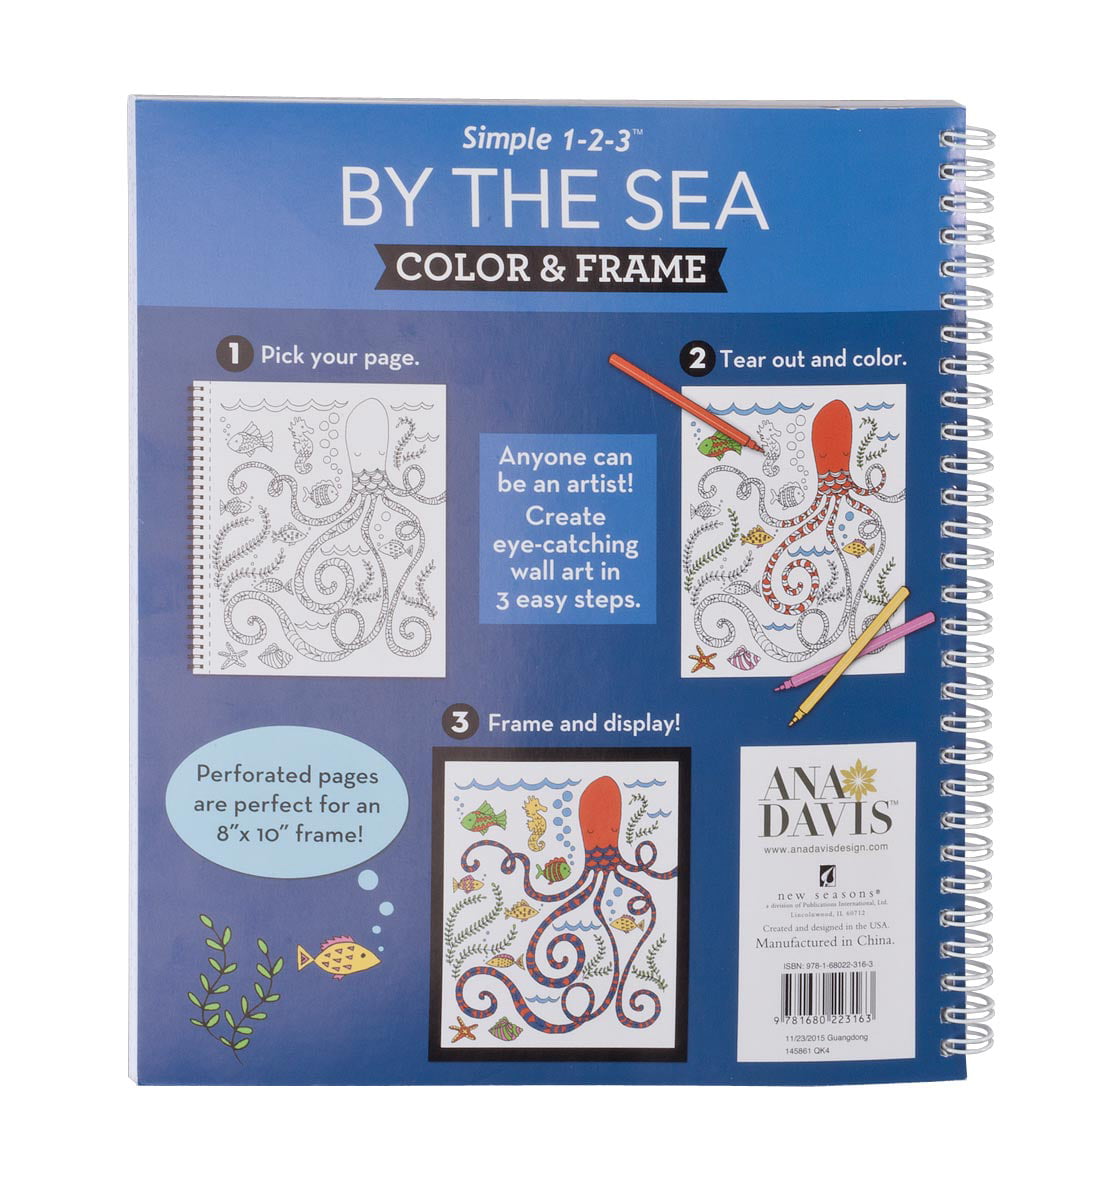 Color & Frame - Seasons (Adult Coloring Book) (Spiral)